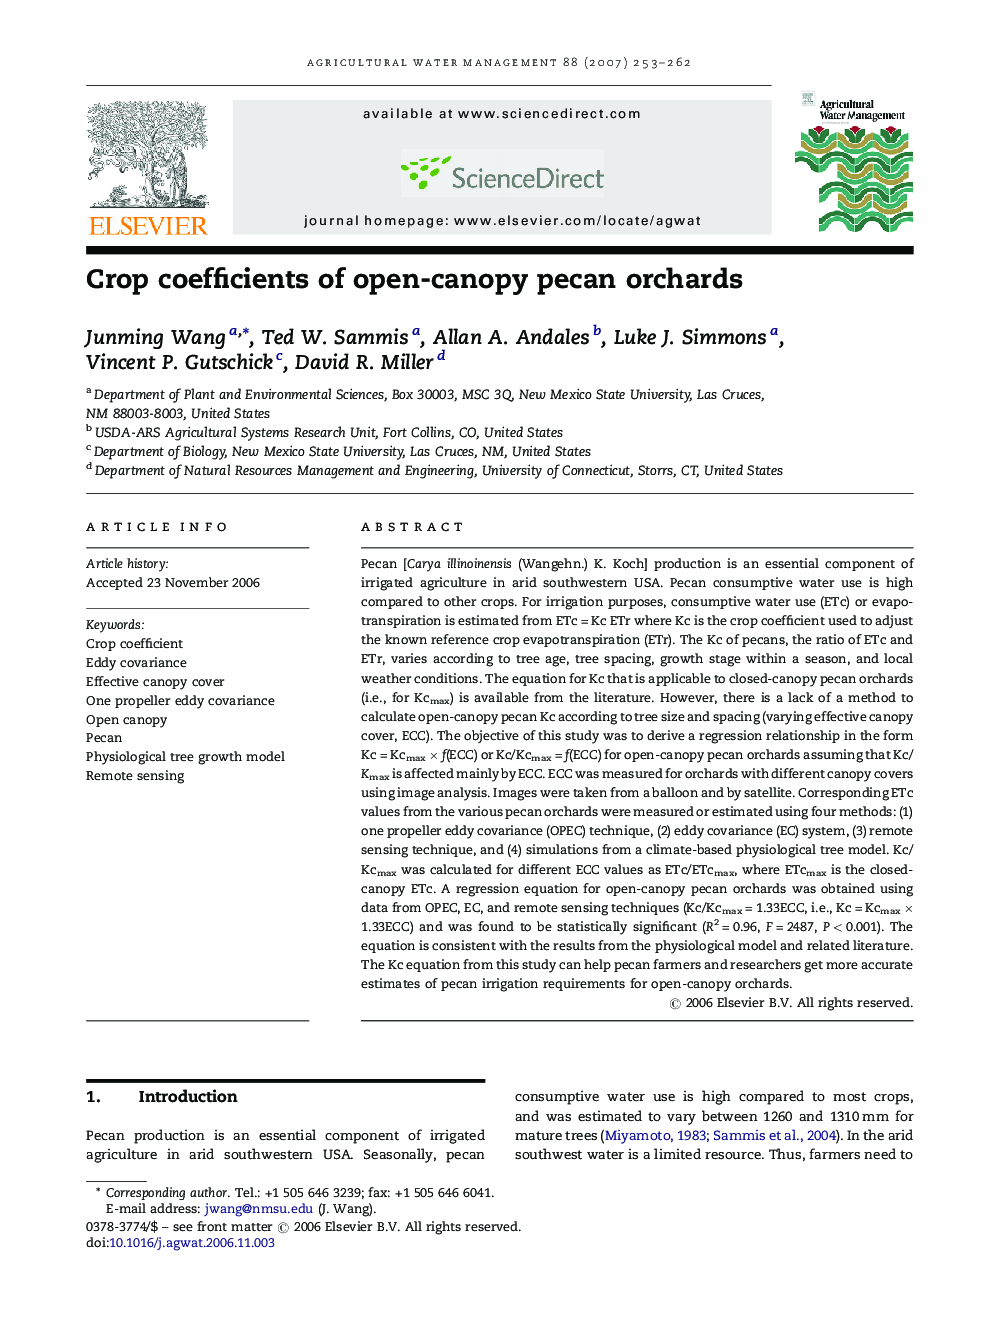 Crop coefficients of open-canopy pecan orchards